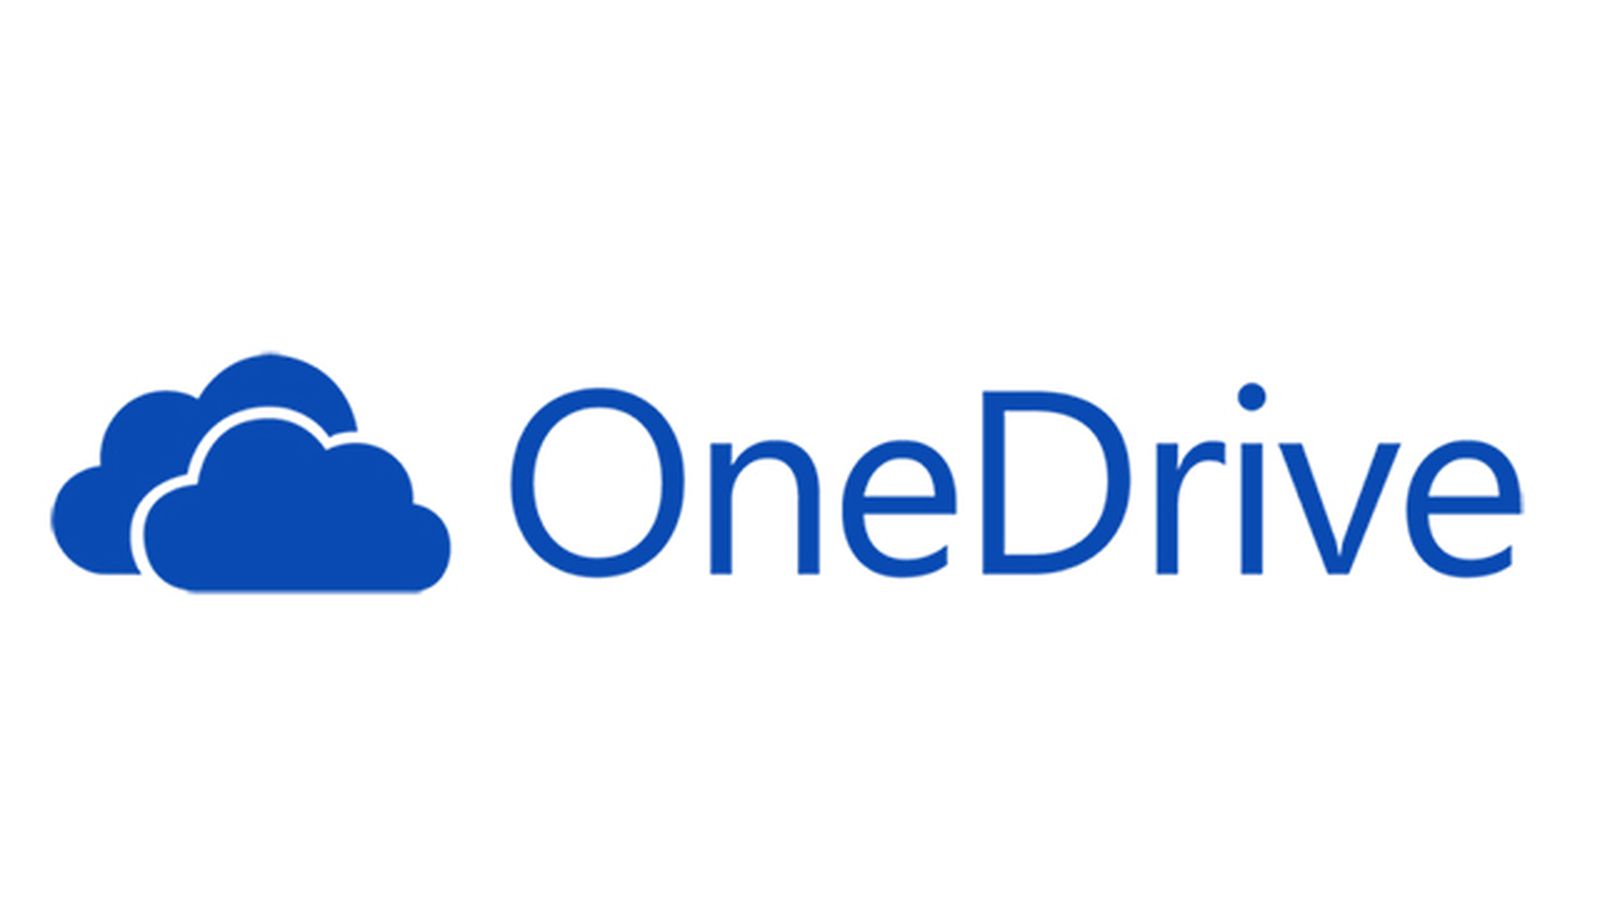 Perbedaan One Drive Google Drive dan Dropbox